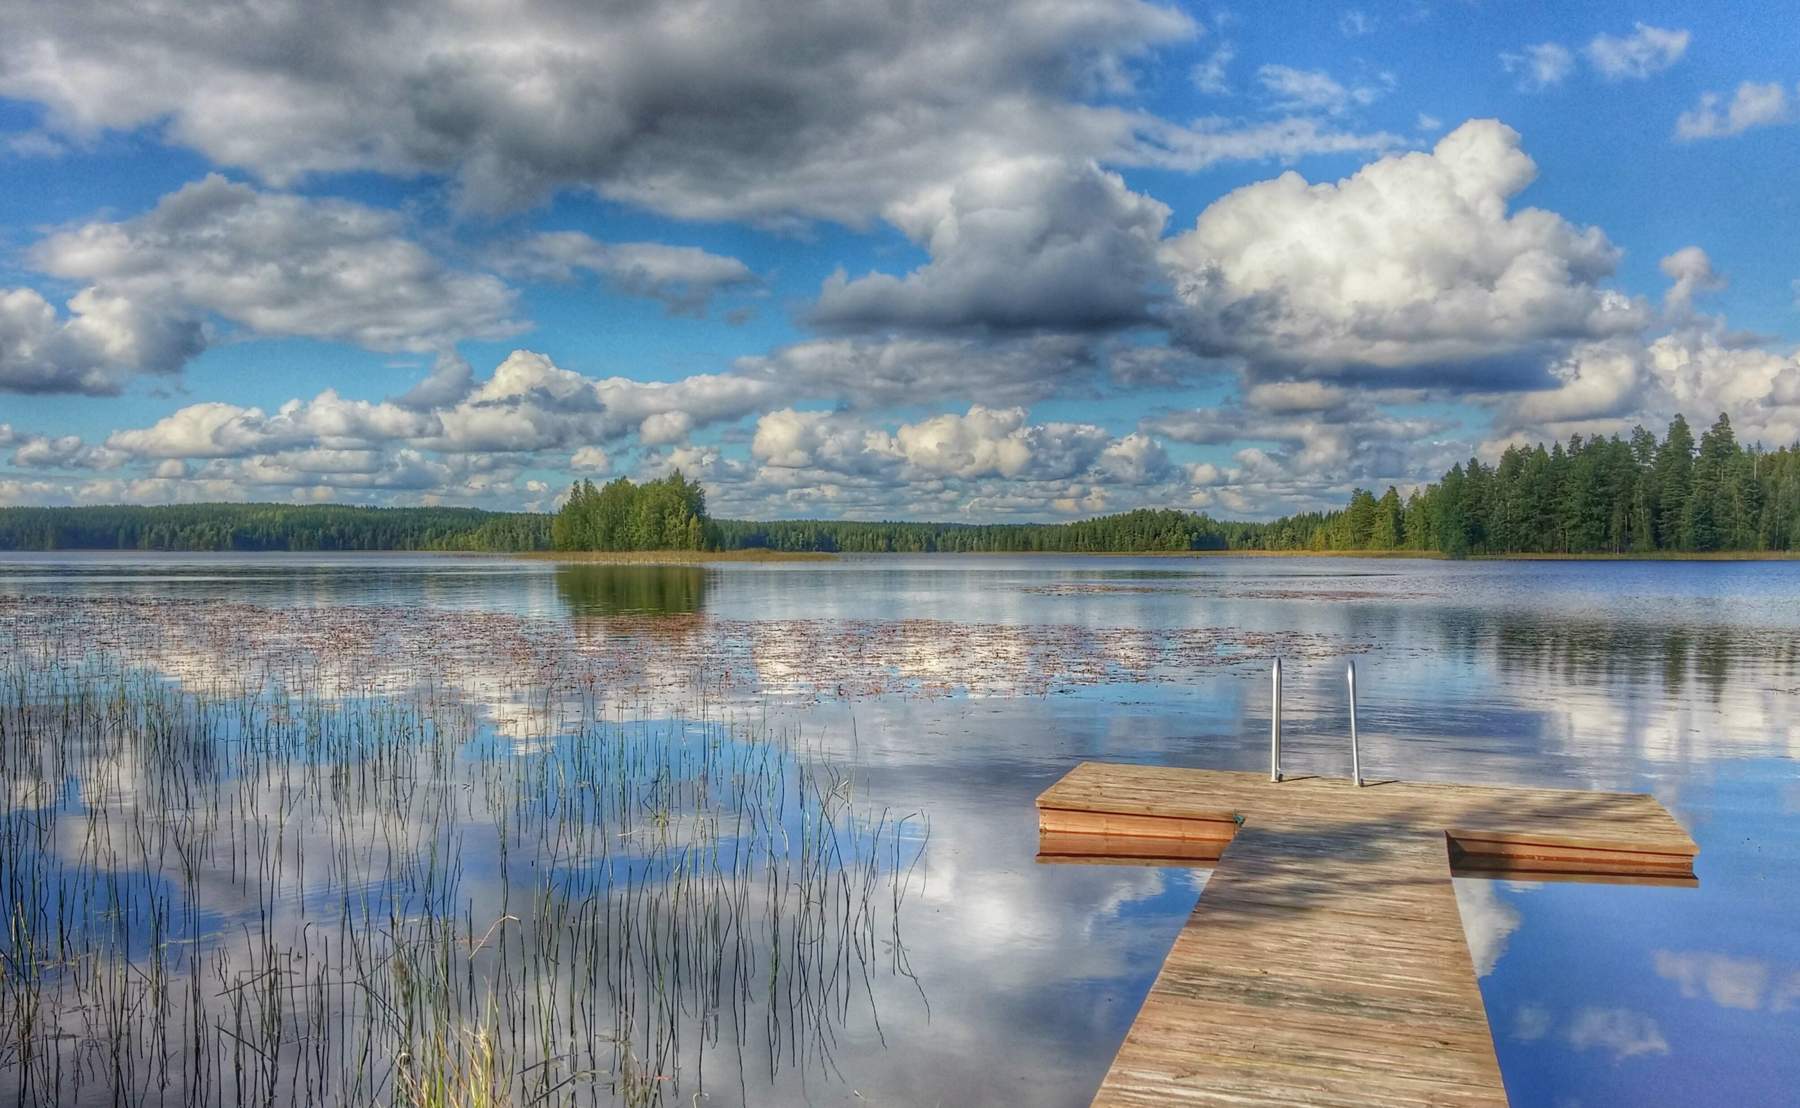 Ylöjärvi, Finland. City travel guide – Attractions, Activities, Local cuisine